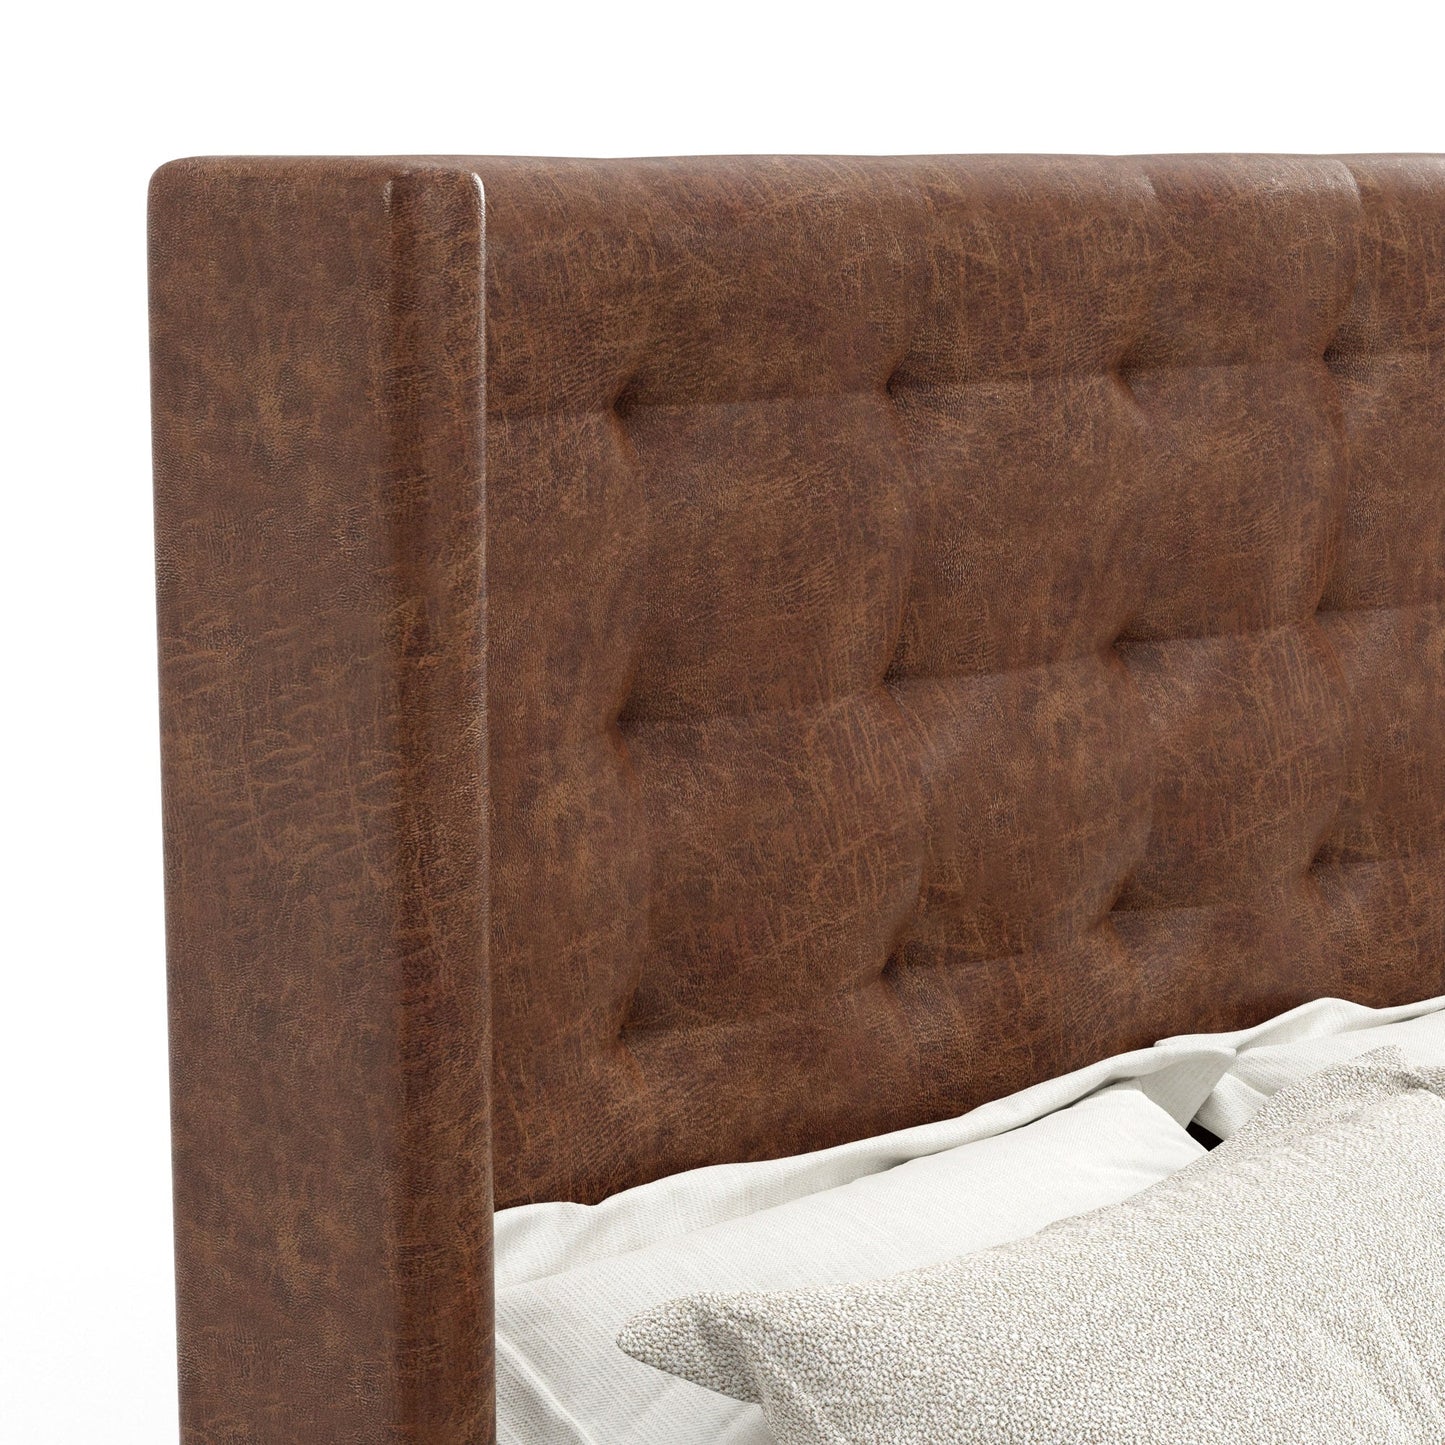 Mundo Platform Bed - Alpine Furniture